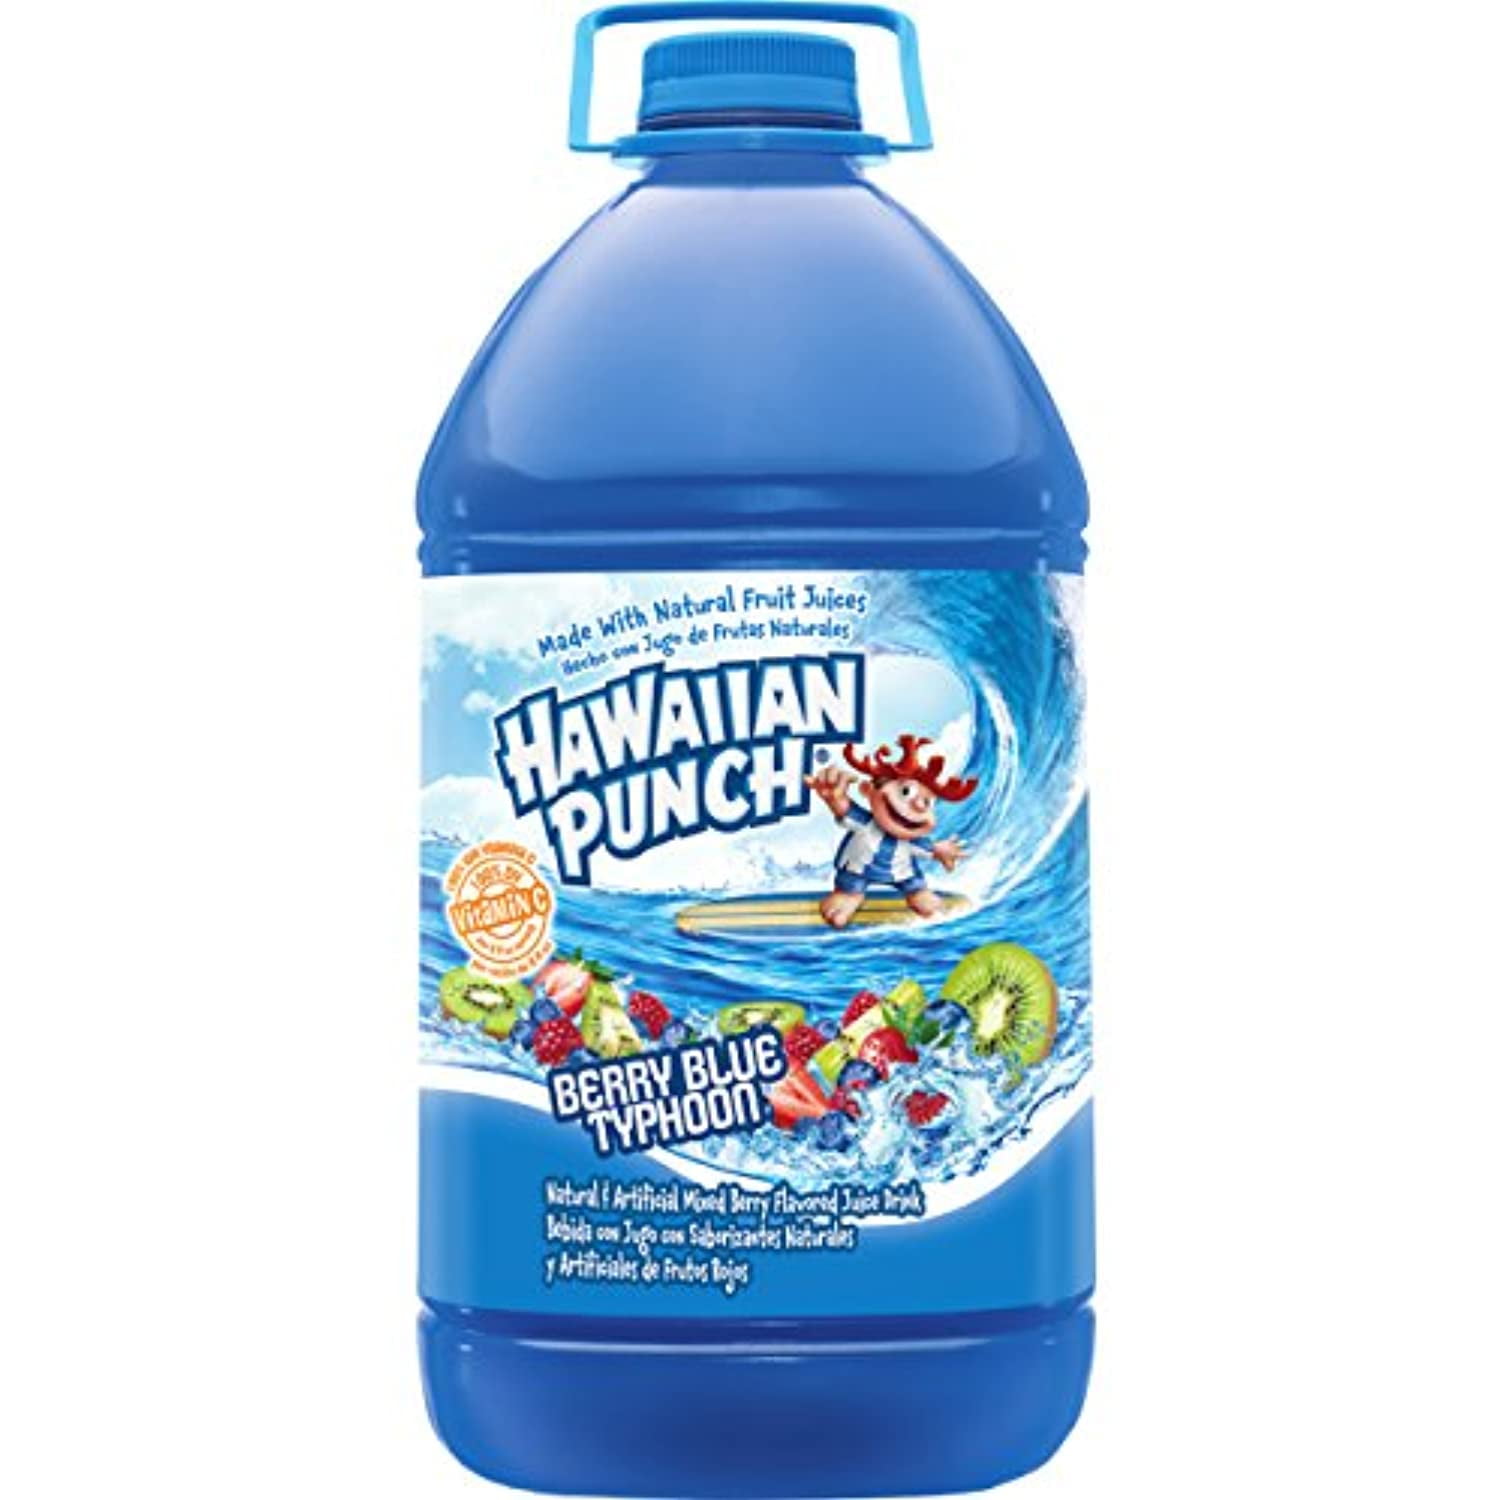 Hawaiian Punch Berry Blue Typhoon 1 Gallon Bottle Pack Of 4 7549